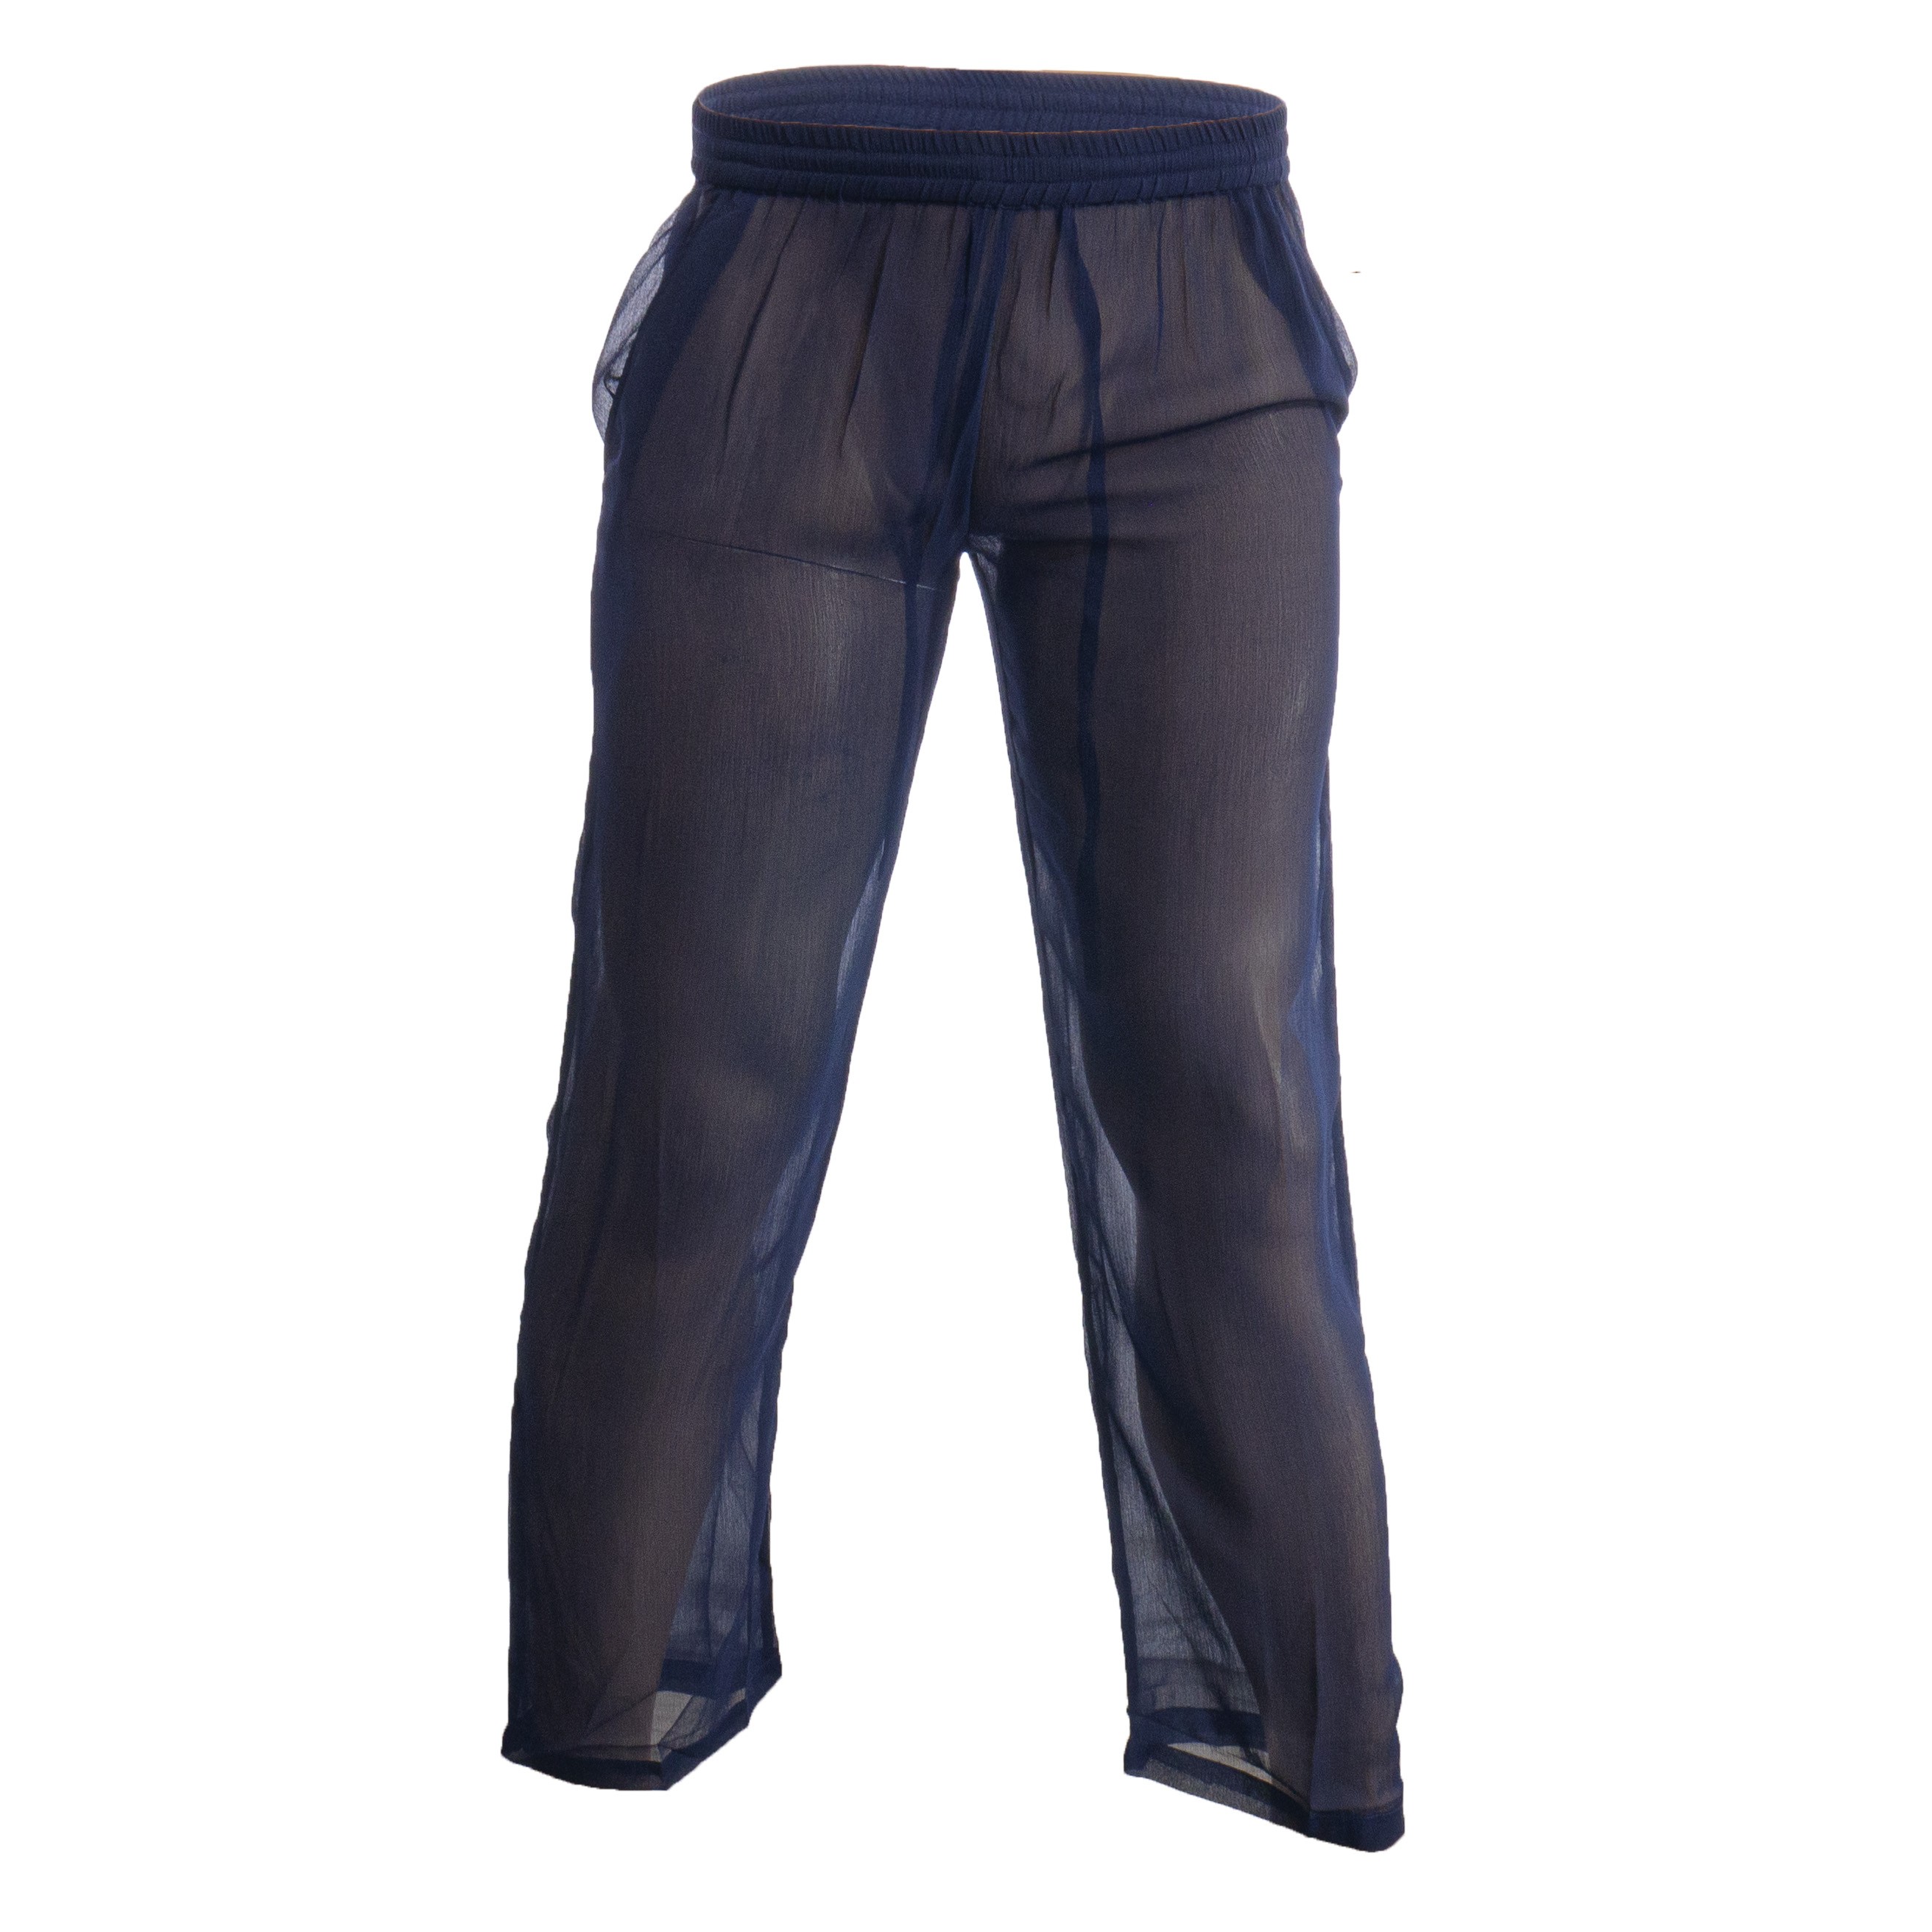 Chantilly Navy Blue Lounge Pants